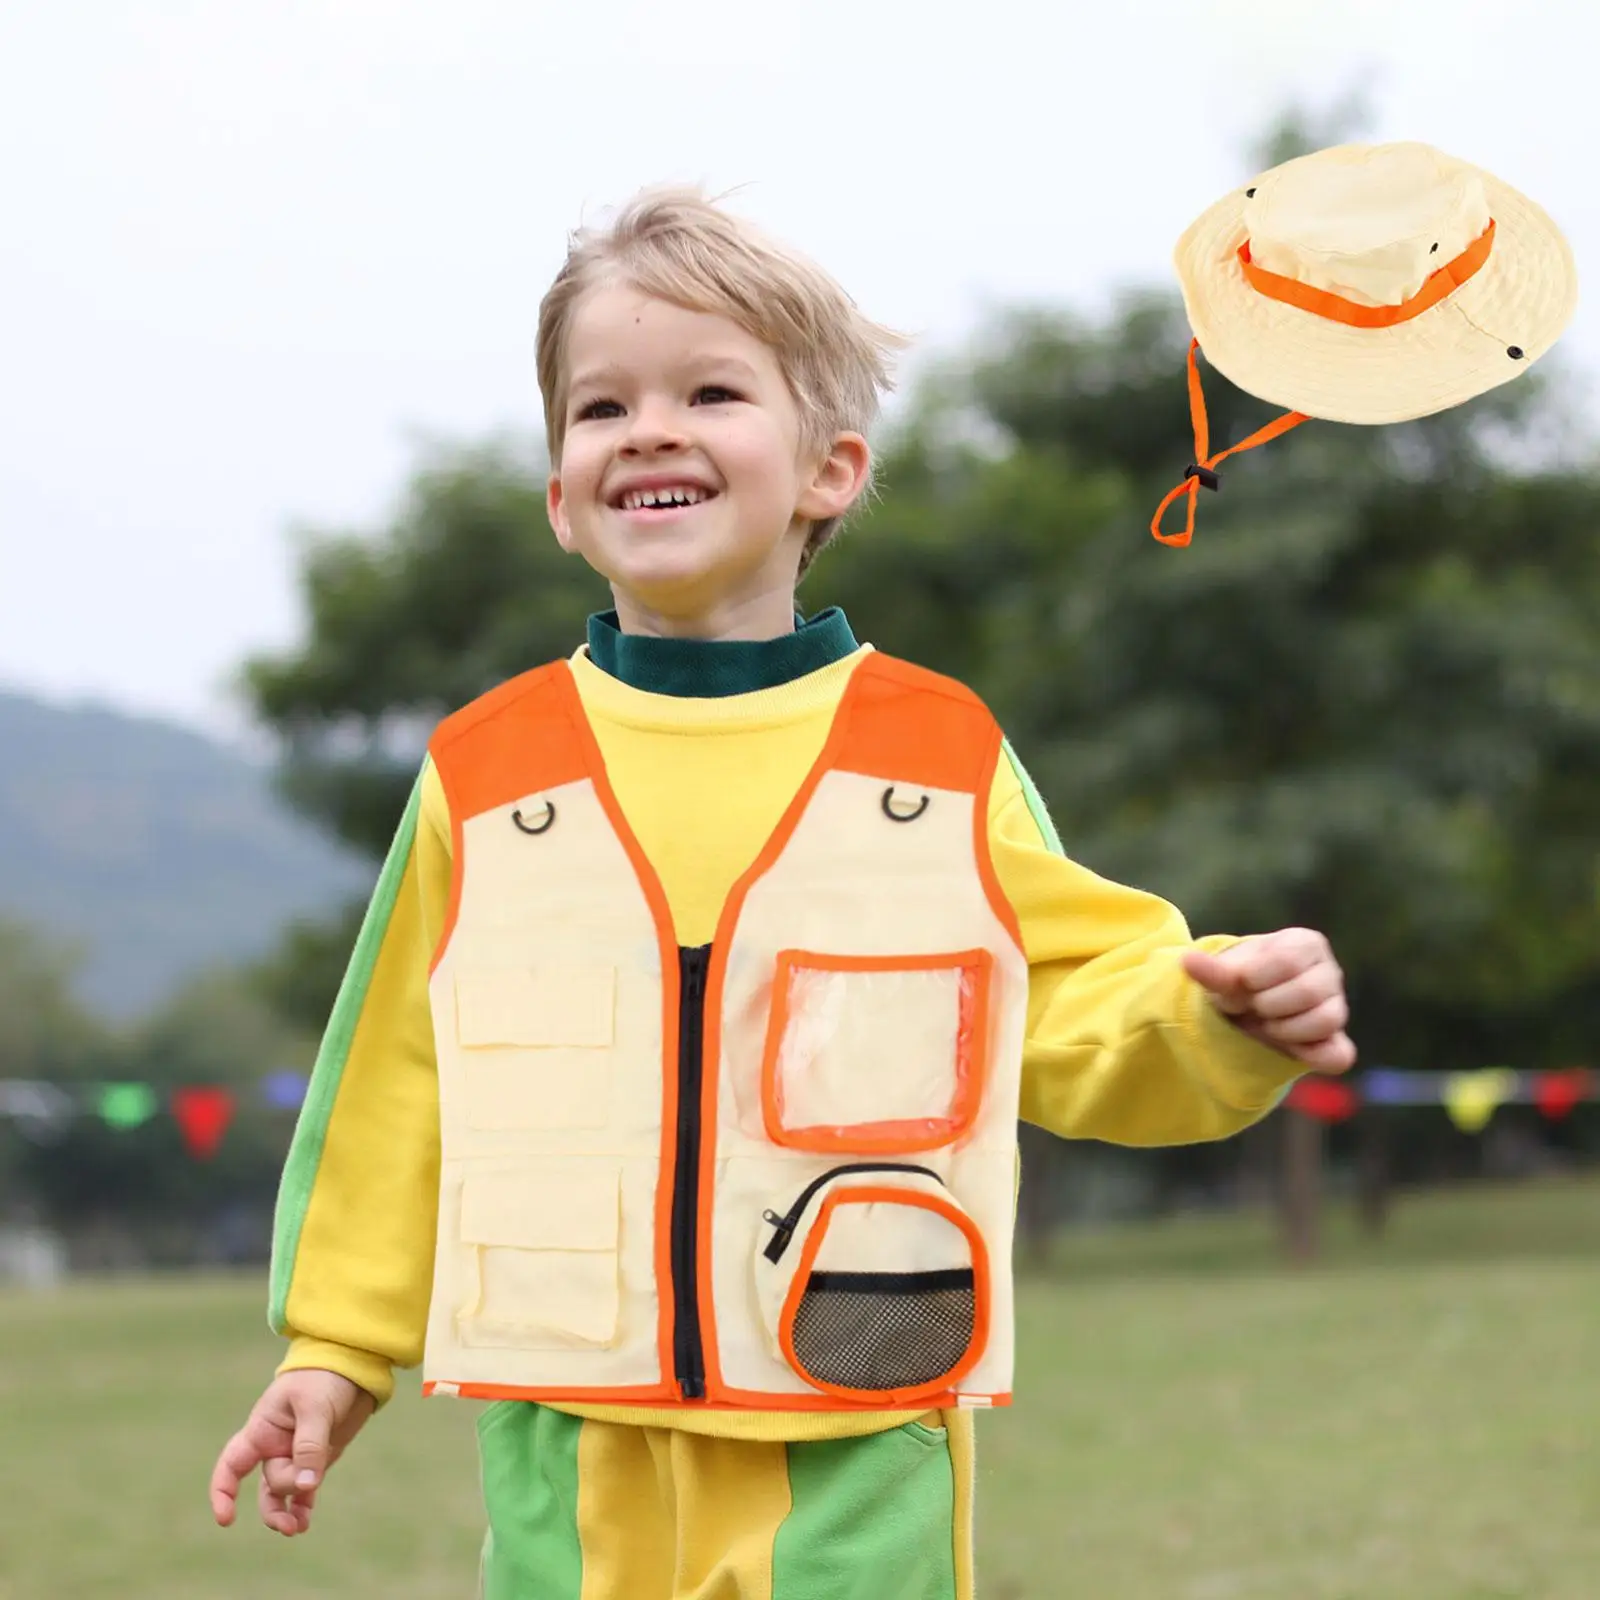 Kids Explorer Costume Kit Vest Hat Set Cosplay Costumes for Children